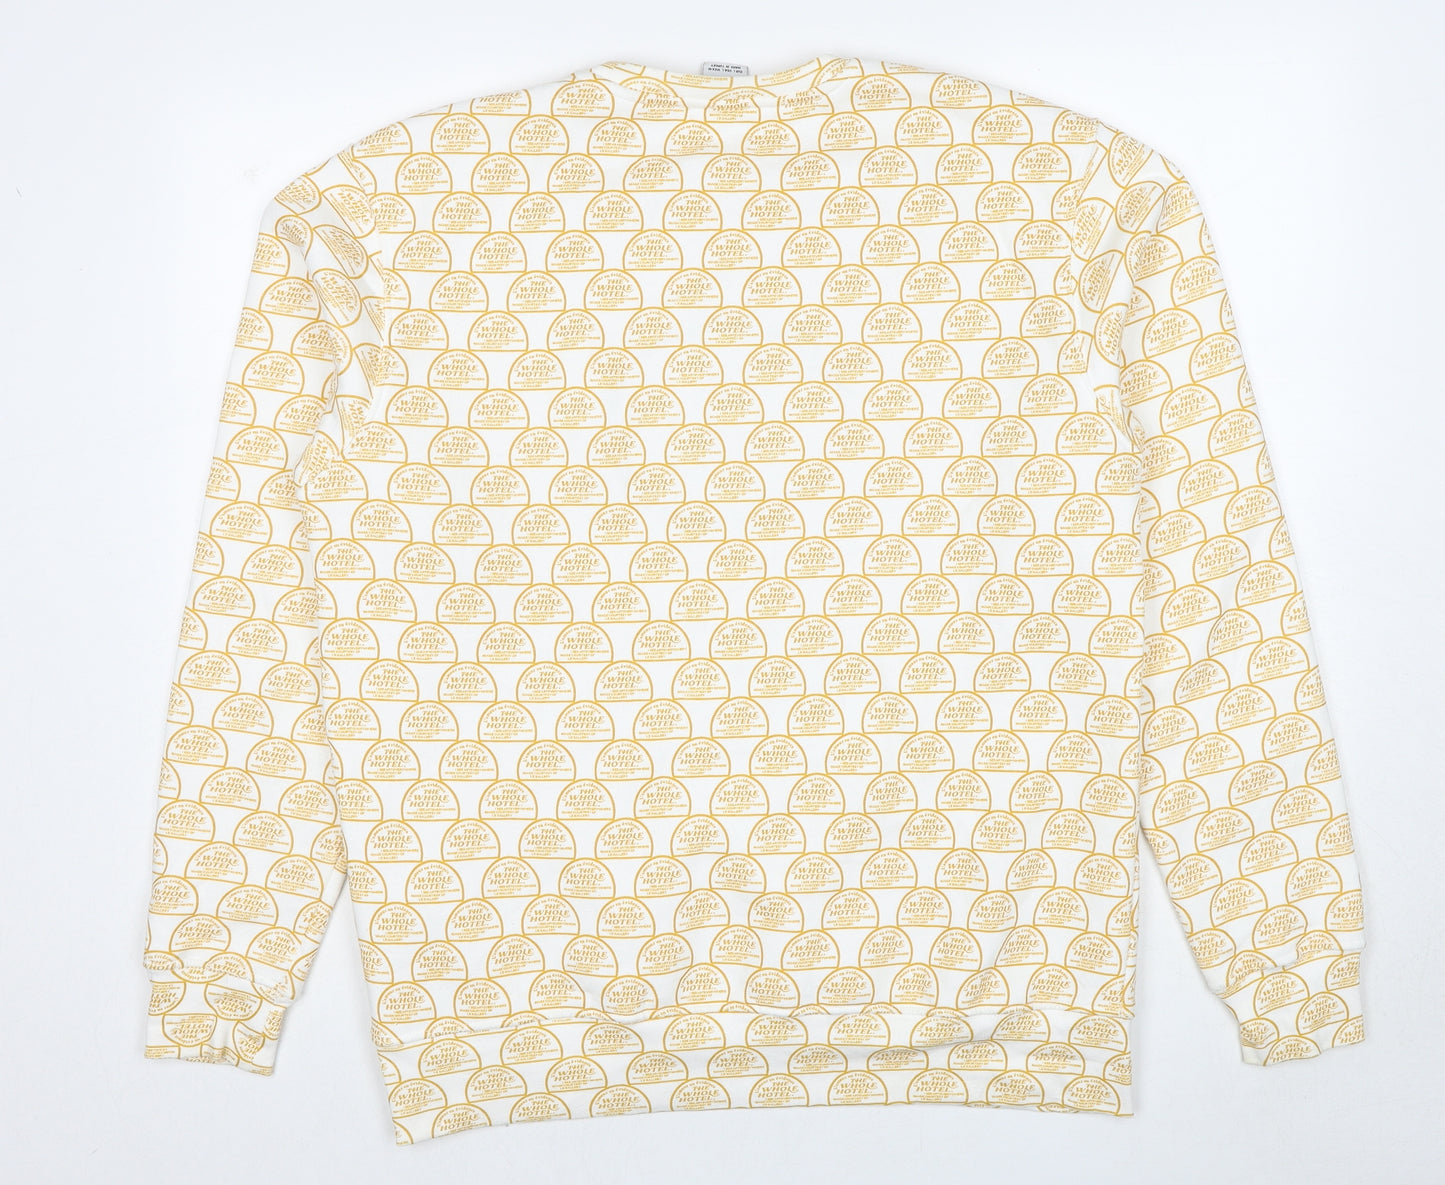 Zara Mens Yellow Geometric Cotton Pullover Sweatshirt Size L - Grand Hotel St. Bureau